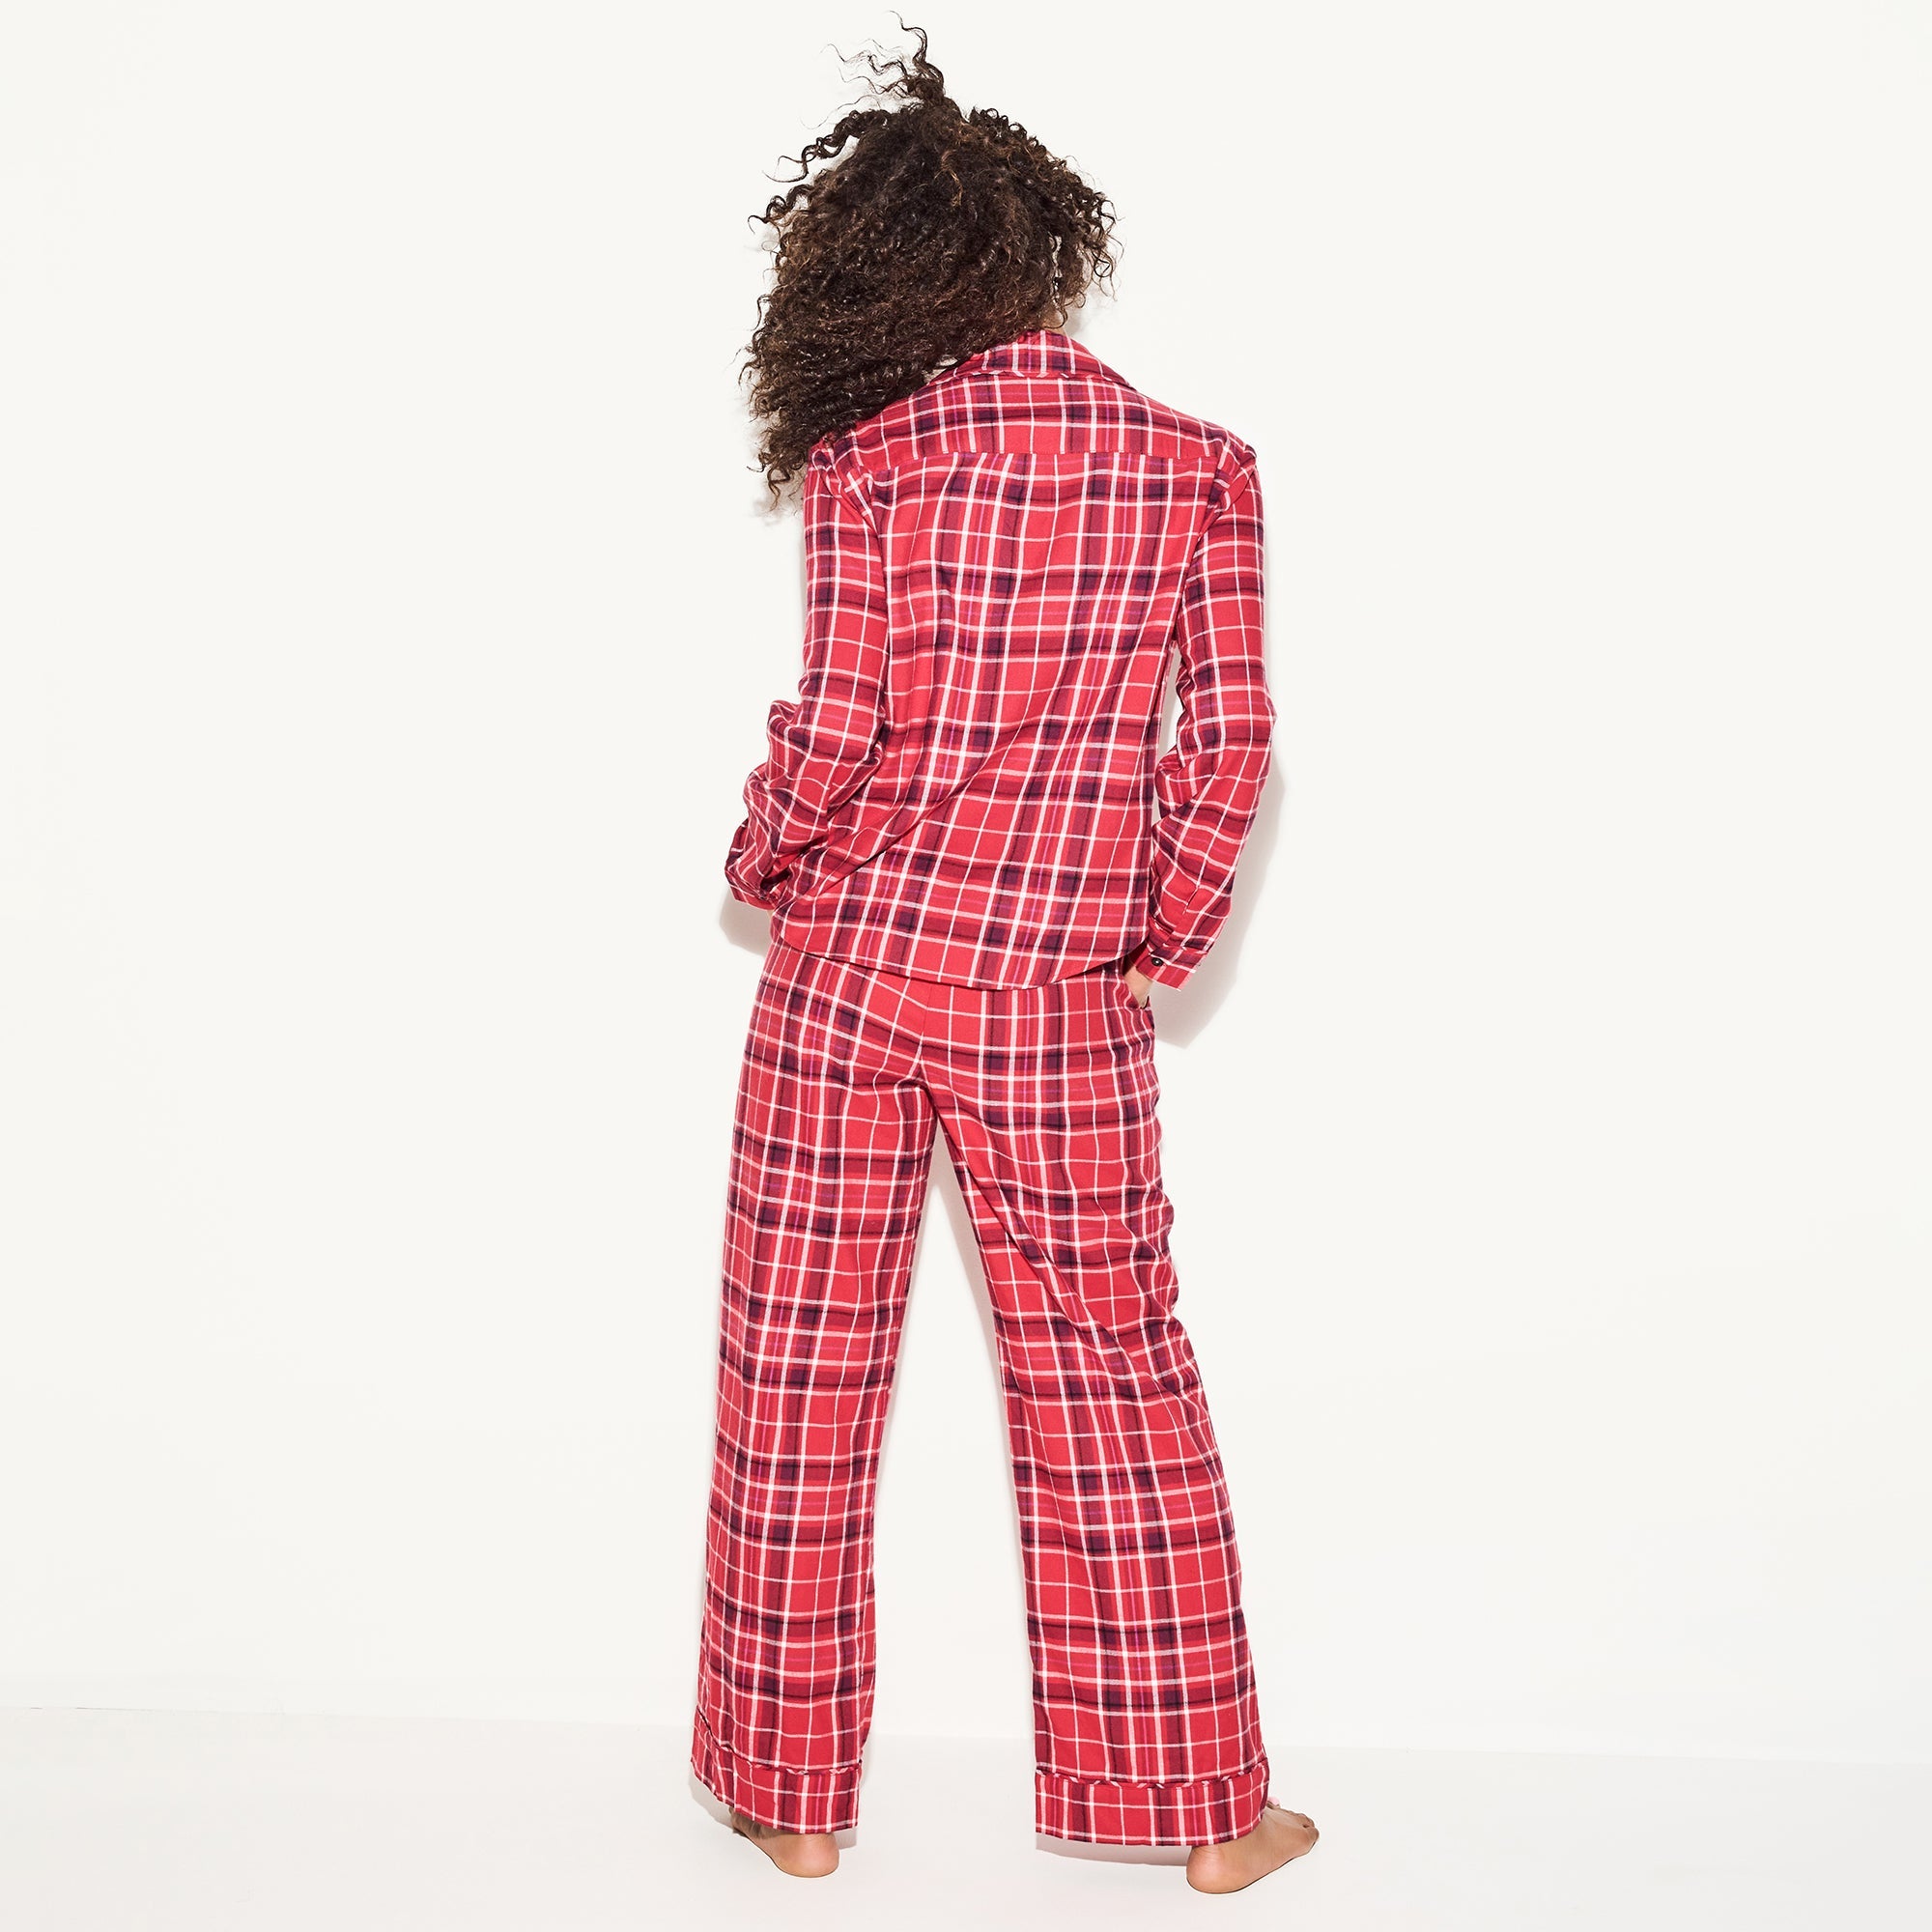 Women Korean Checkered Plaid Pajama Set Button Down Top and Short Sleeves  Pink Gray Red Sleepwear